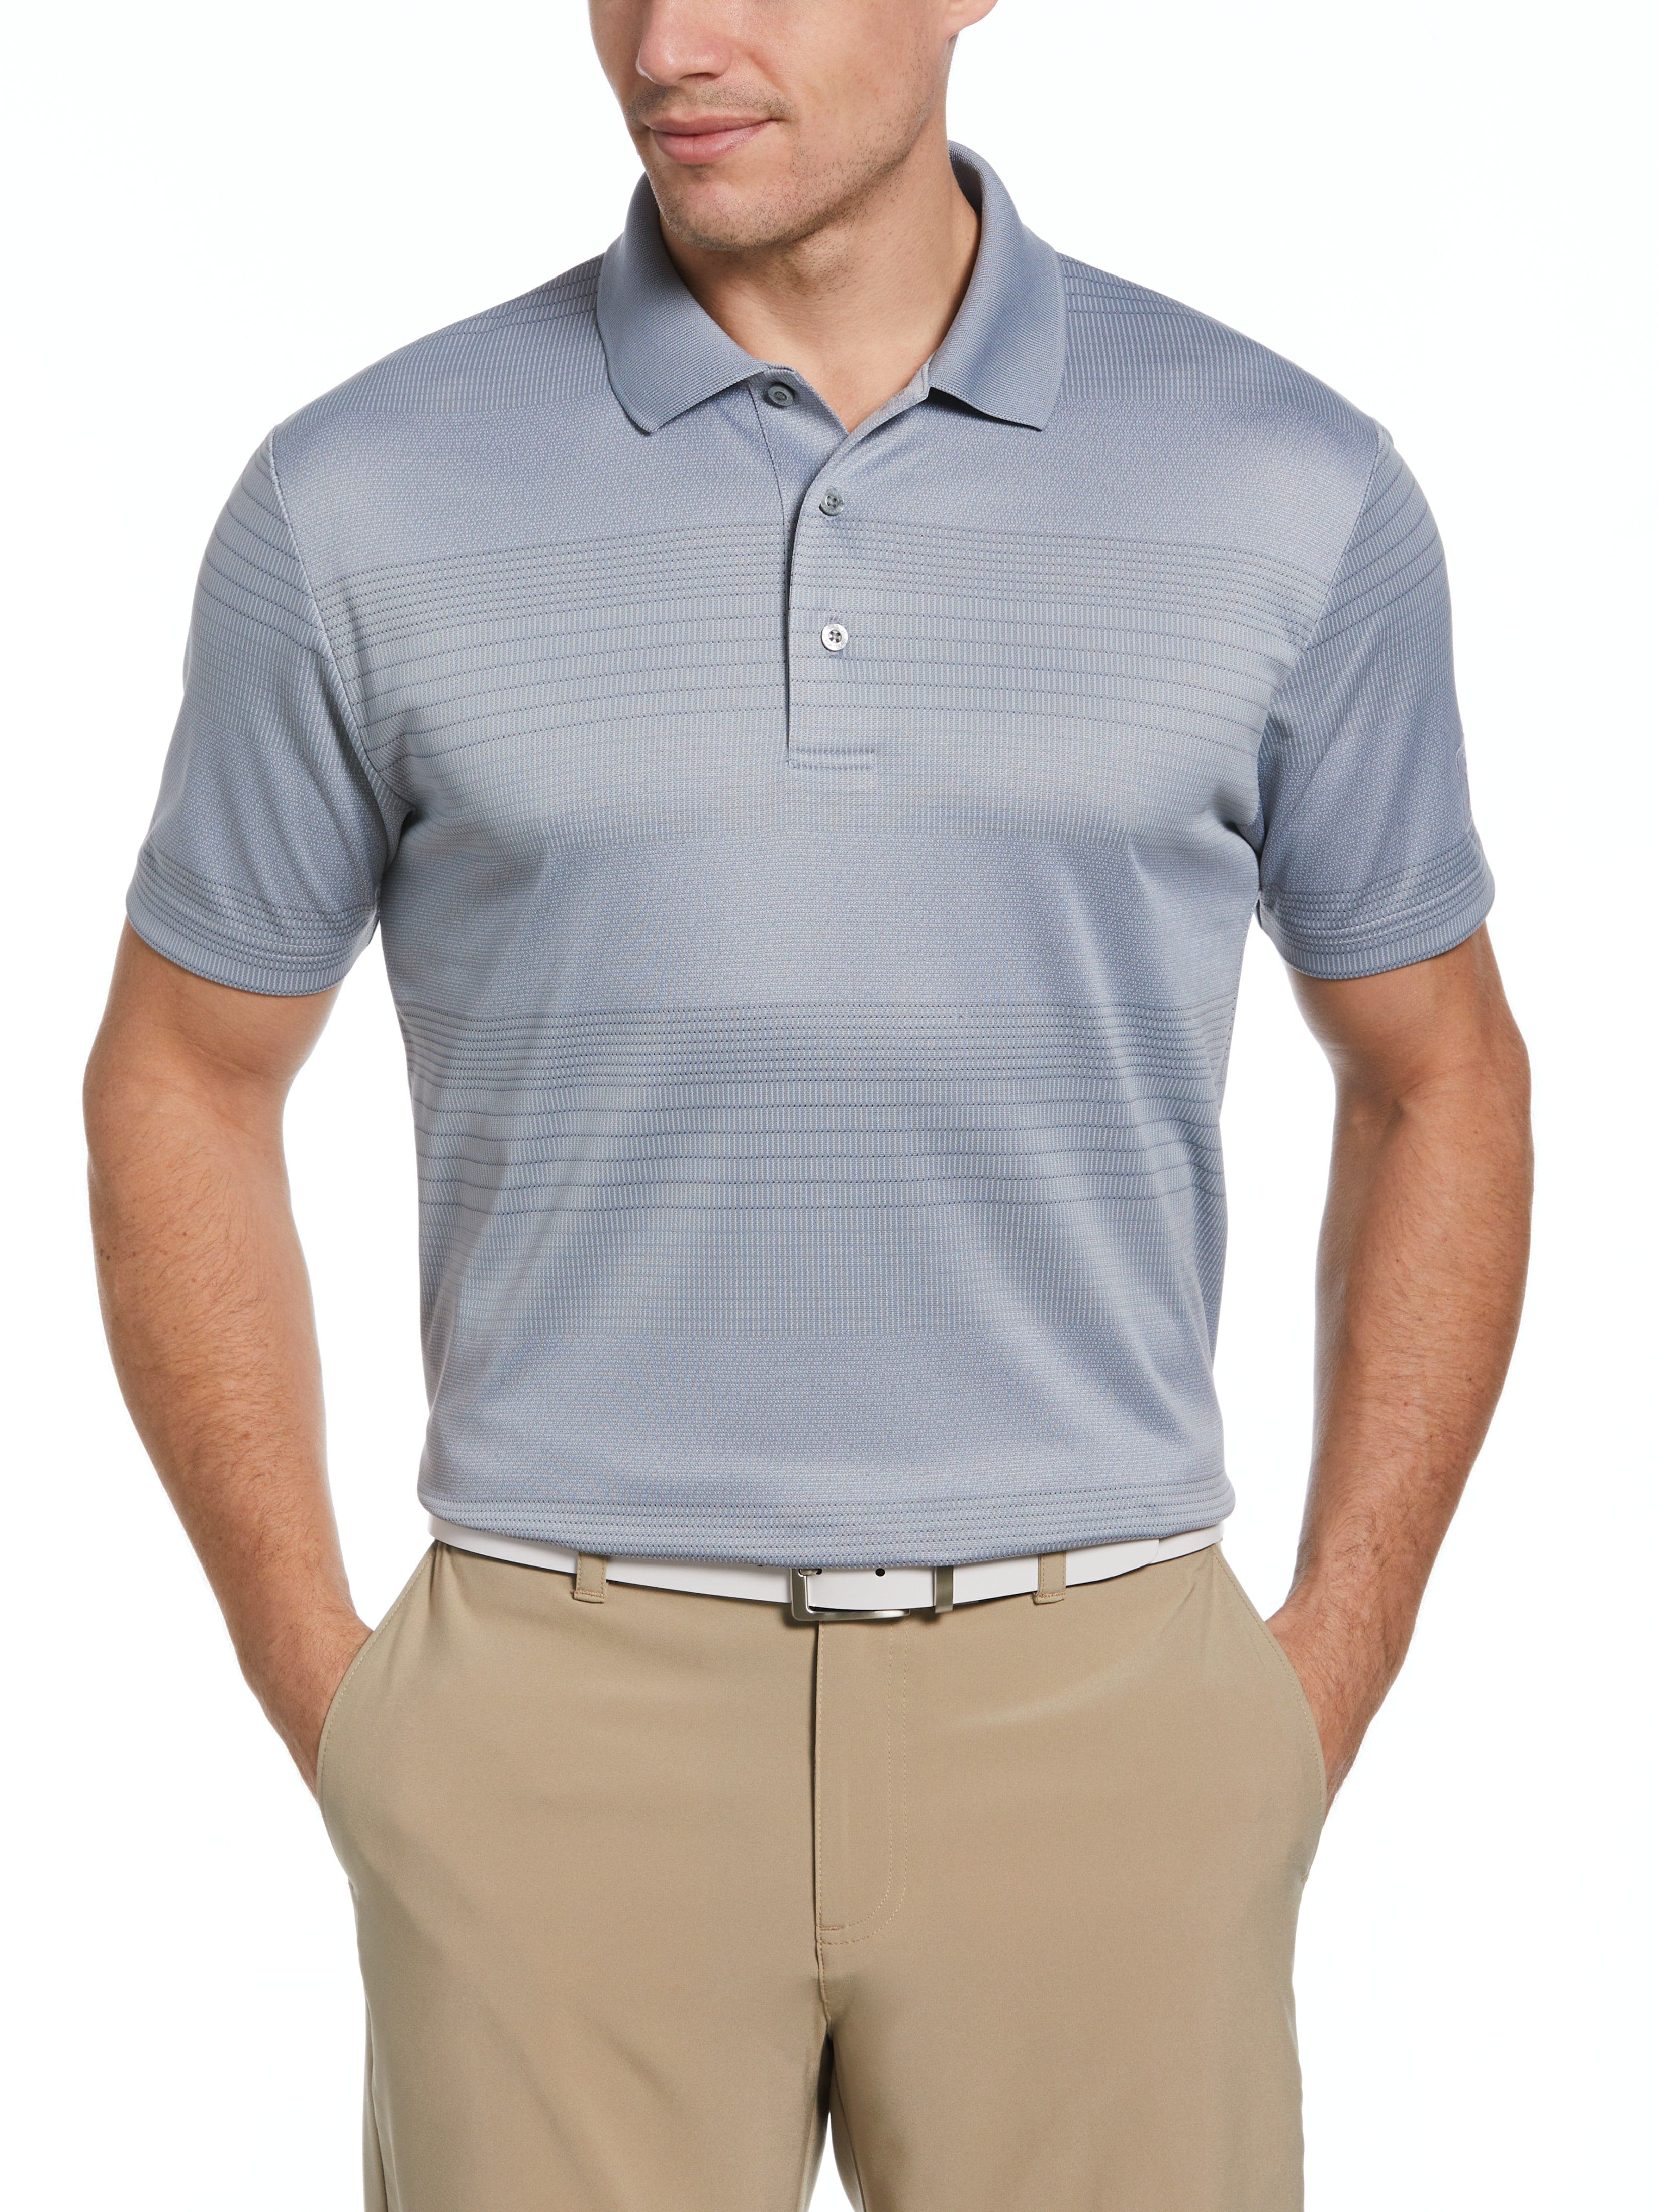 PGA TOUR Apparel Mens Large Scale Birdseye Stripe Jacquard Golf Polo Shirt, Size 3XL, Tradewinds Gray, 100% Polyester | Golf Apparel Shop